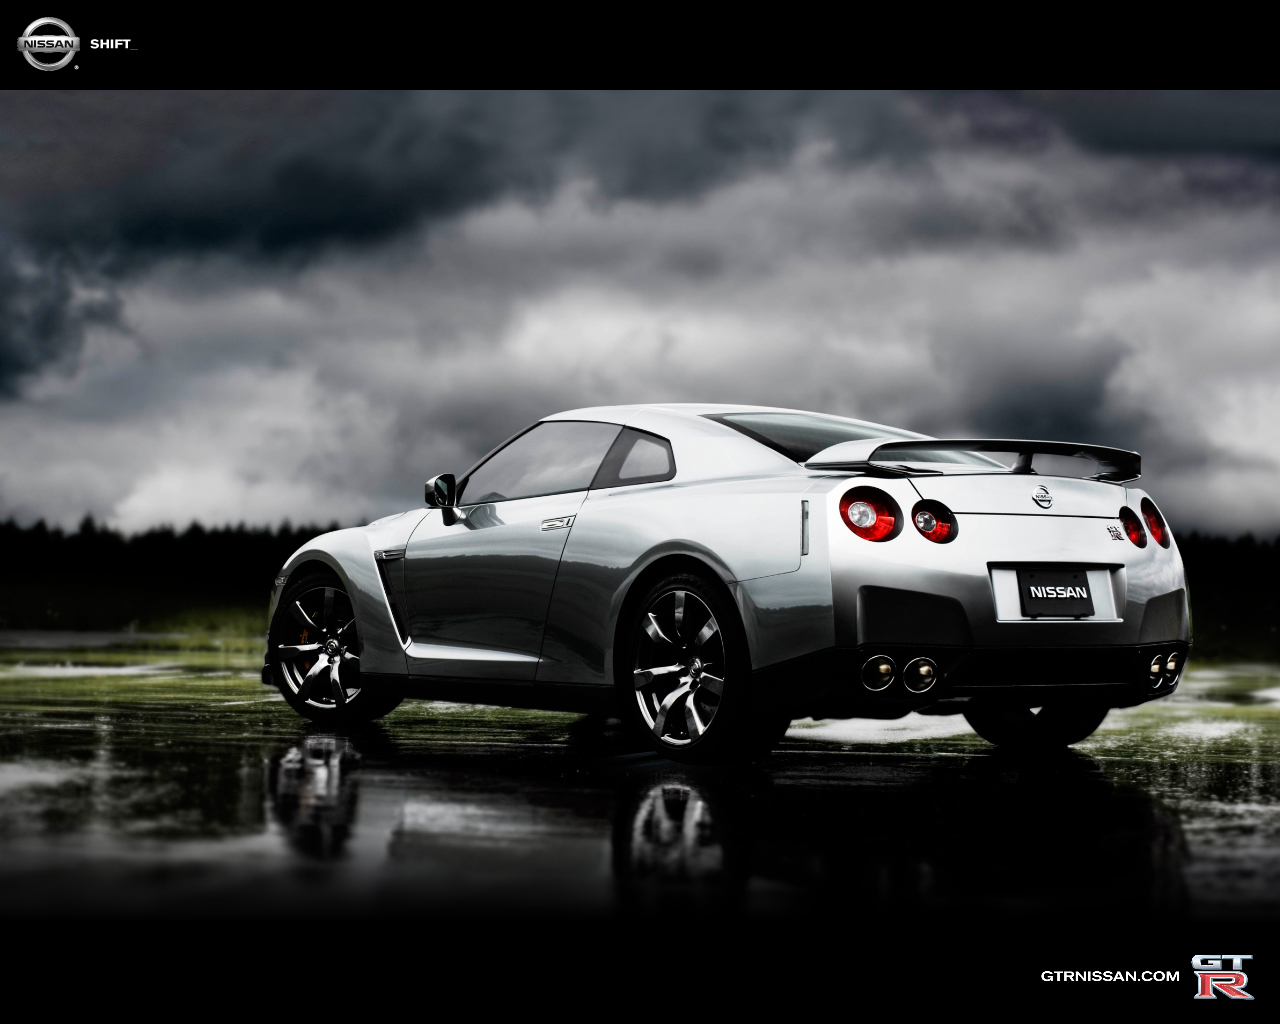 CAR CC: Nissan gtr wallpaper car blog offers best car models, designs, reviews ...